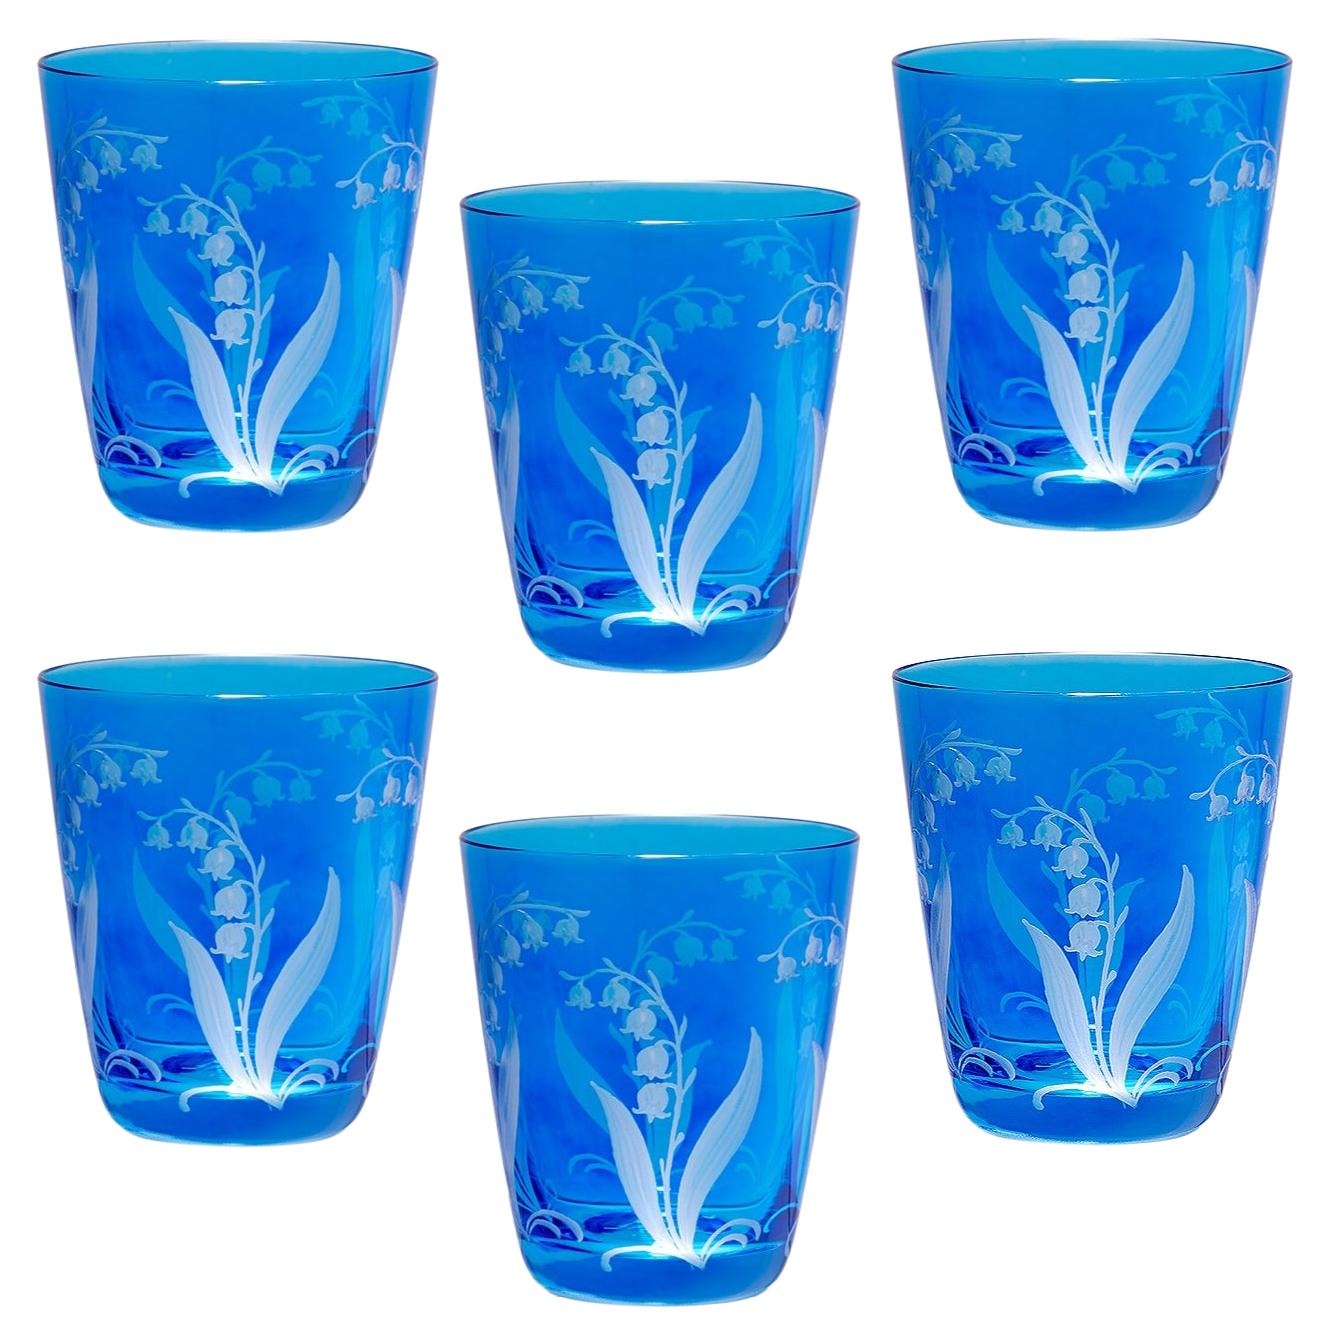 Juego de seis vasos de vidrio estilo campestre Cristal azul Sofina Boutique Kitzbuehel